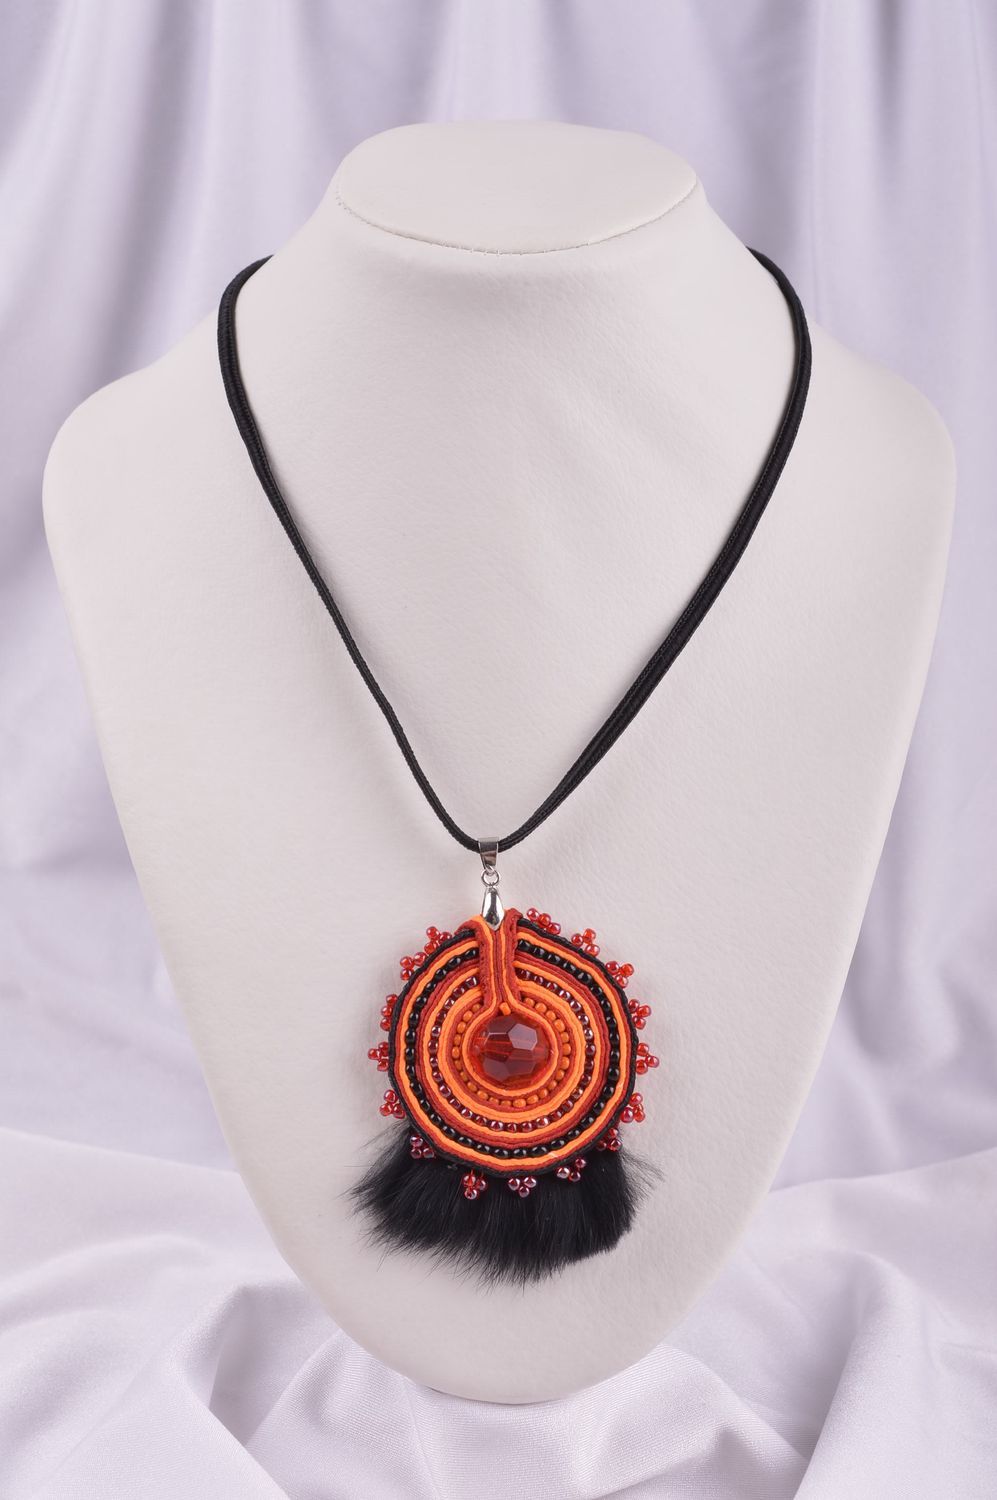 Stylish handmade textile necklace soutache jewelry costume jewelry designs photo 1